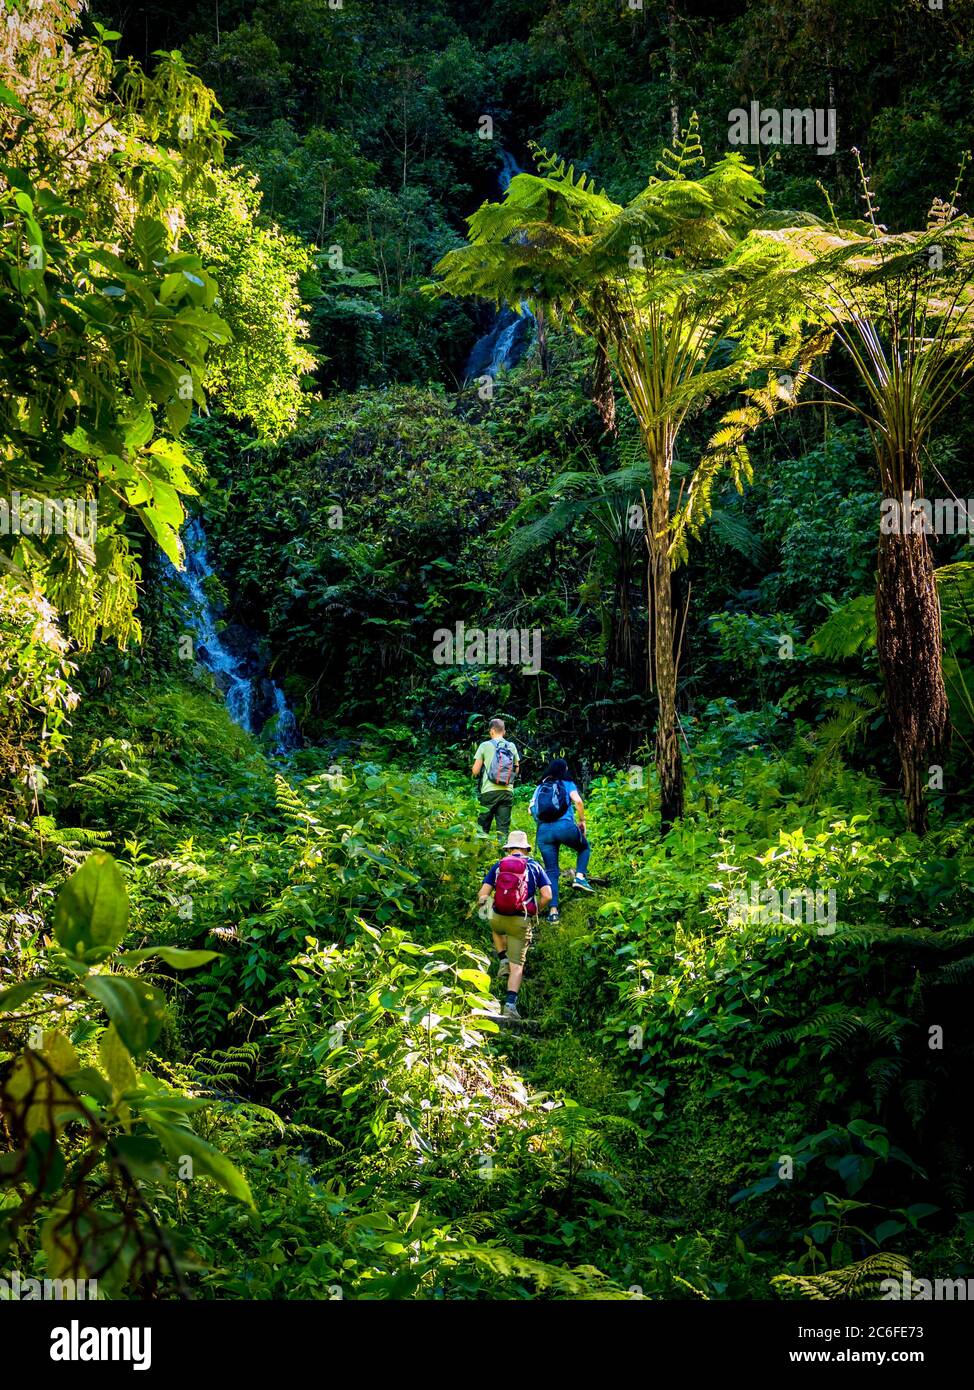 un grupo de tres personas explora la selva tropical en un pequeño sendero junto a una cascada a través de la selva peruana rodeada de grandes helechos en daytim Foto de stock